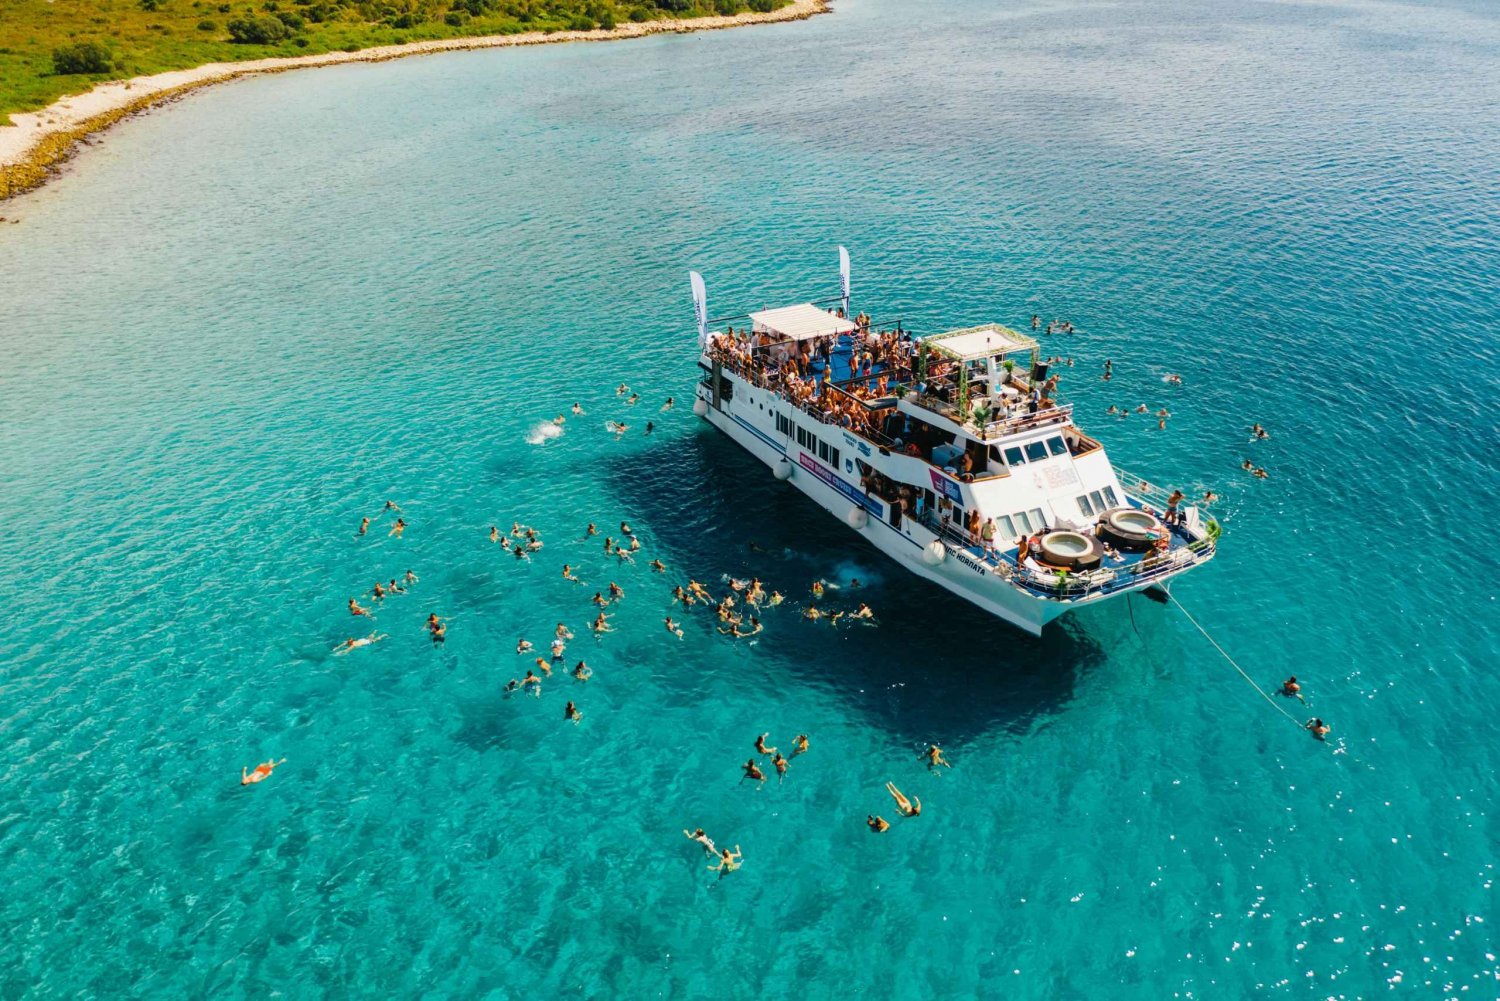 Zrce Booze Cruise - Novalja Boat Party